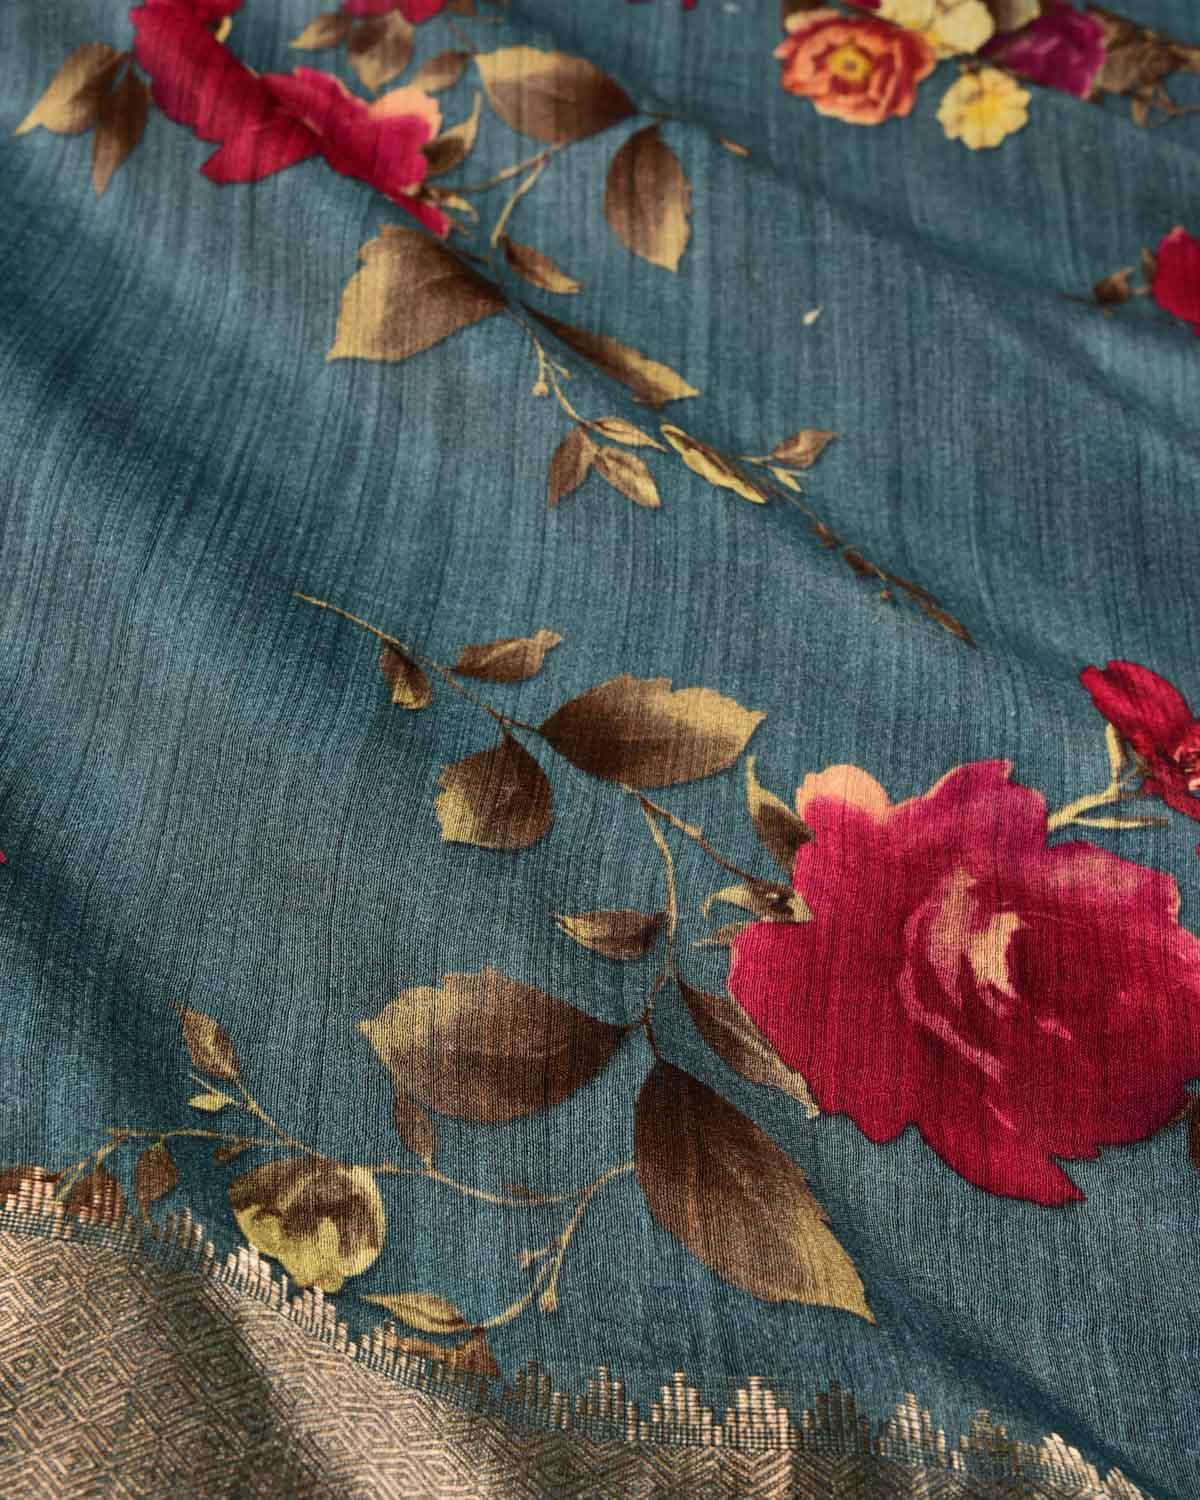 Marengo Gray Floral Printed Muga Silk Saree with Zari Brocade Border - By HolyWeaves, Benares